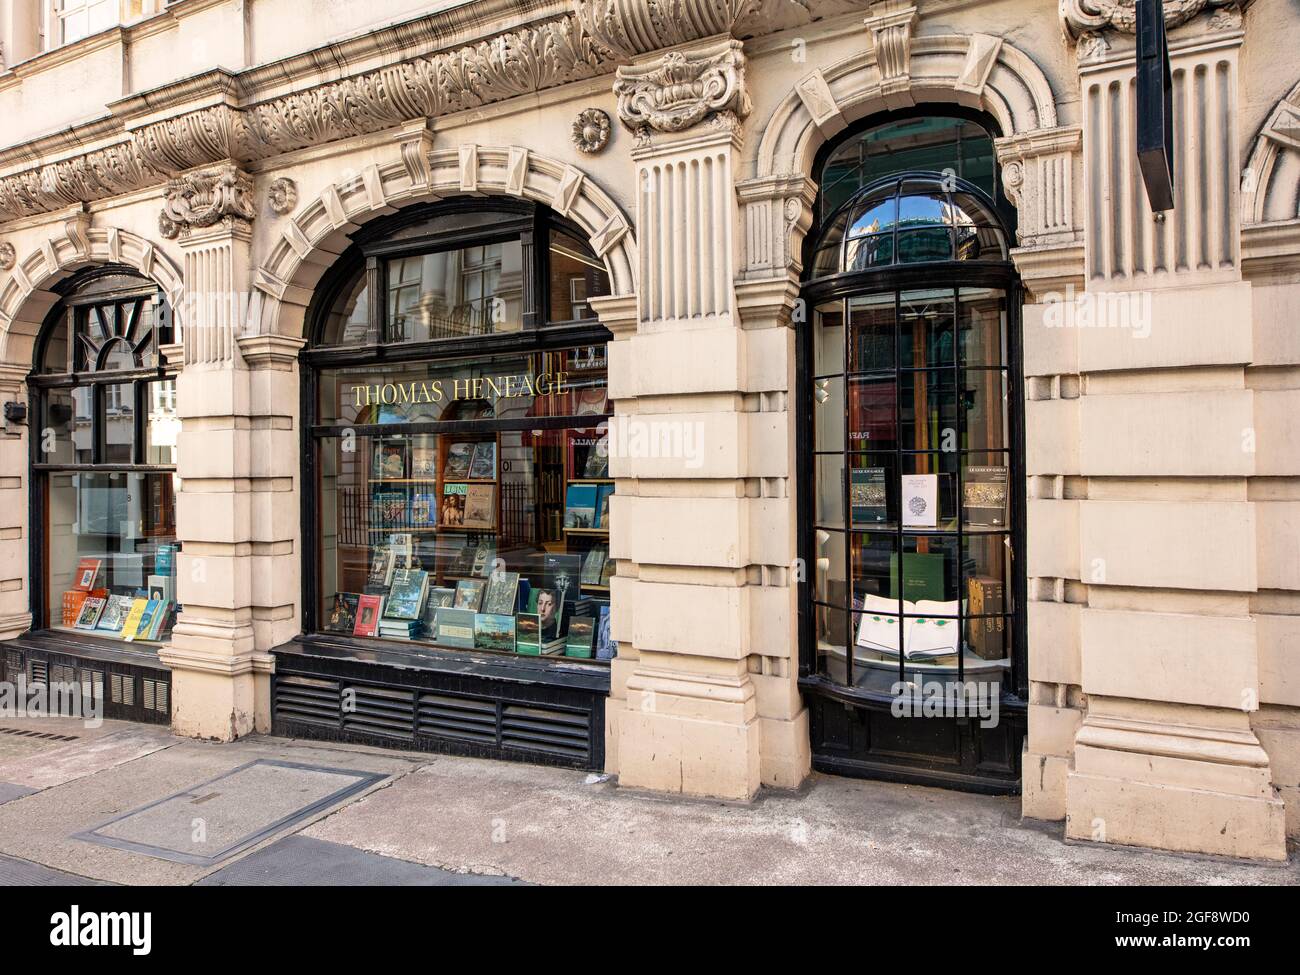 Thomas Heneage Art Books, an upscale bookshop at 42 Duke St St James's, London, UK Stock Photo